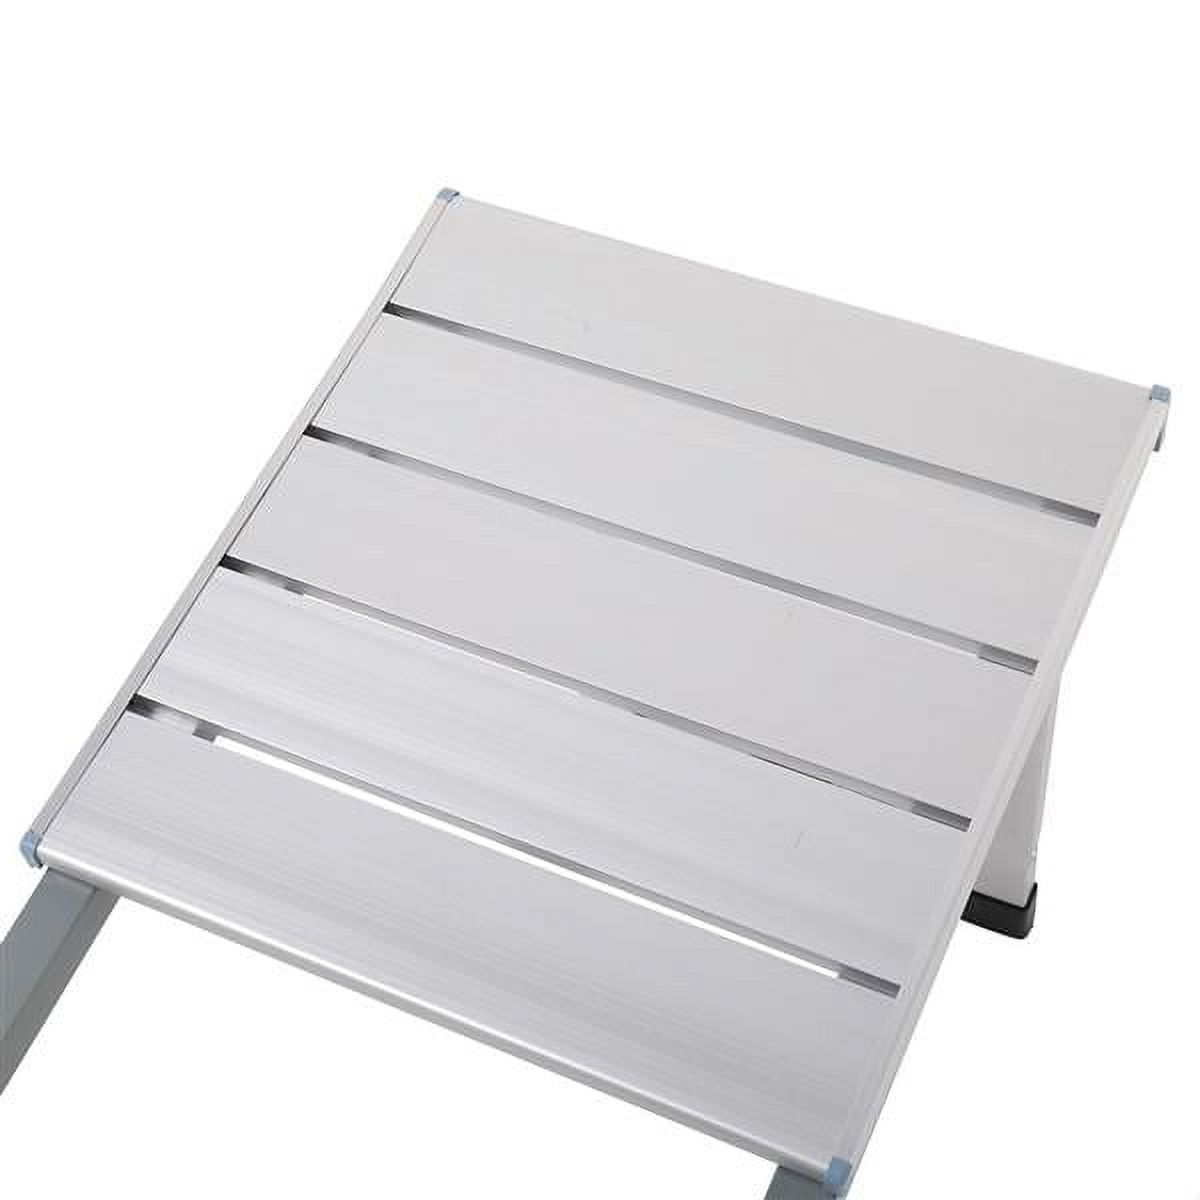 Miekor Aluminum Folding Camping Picnic Table Chair Set Portable Suitcase +Umbrella Hole - image 4 of 8